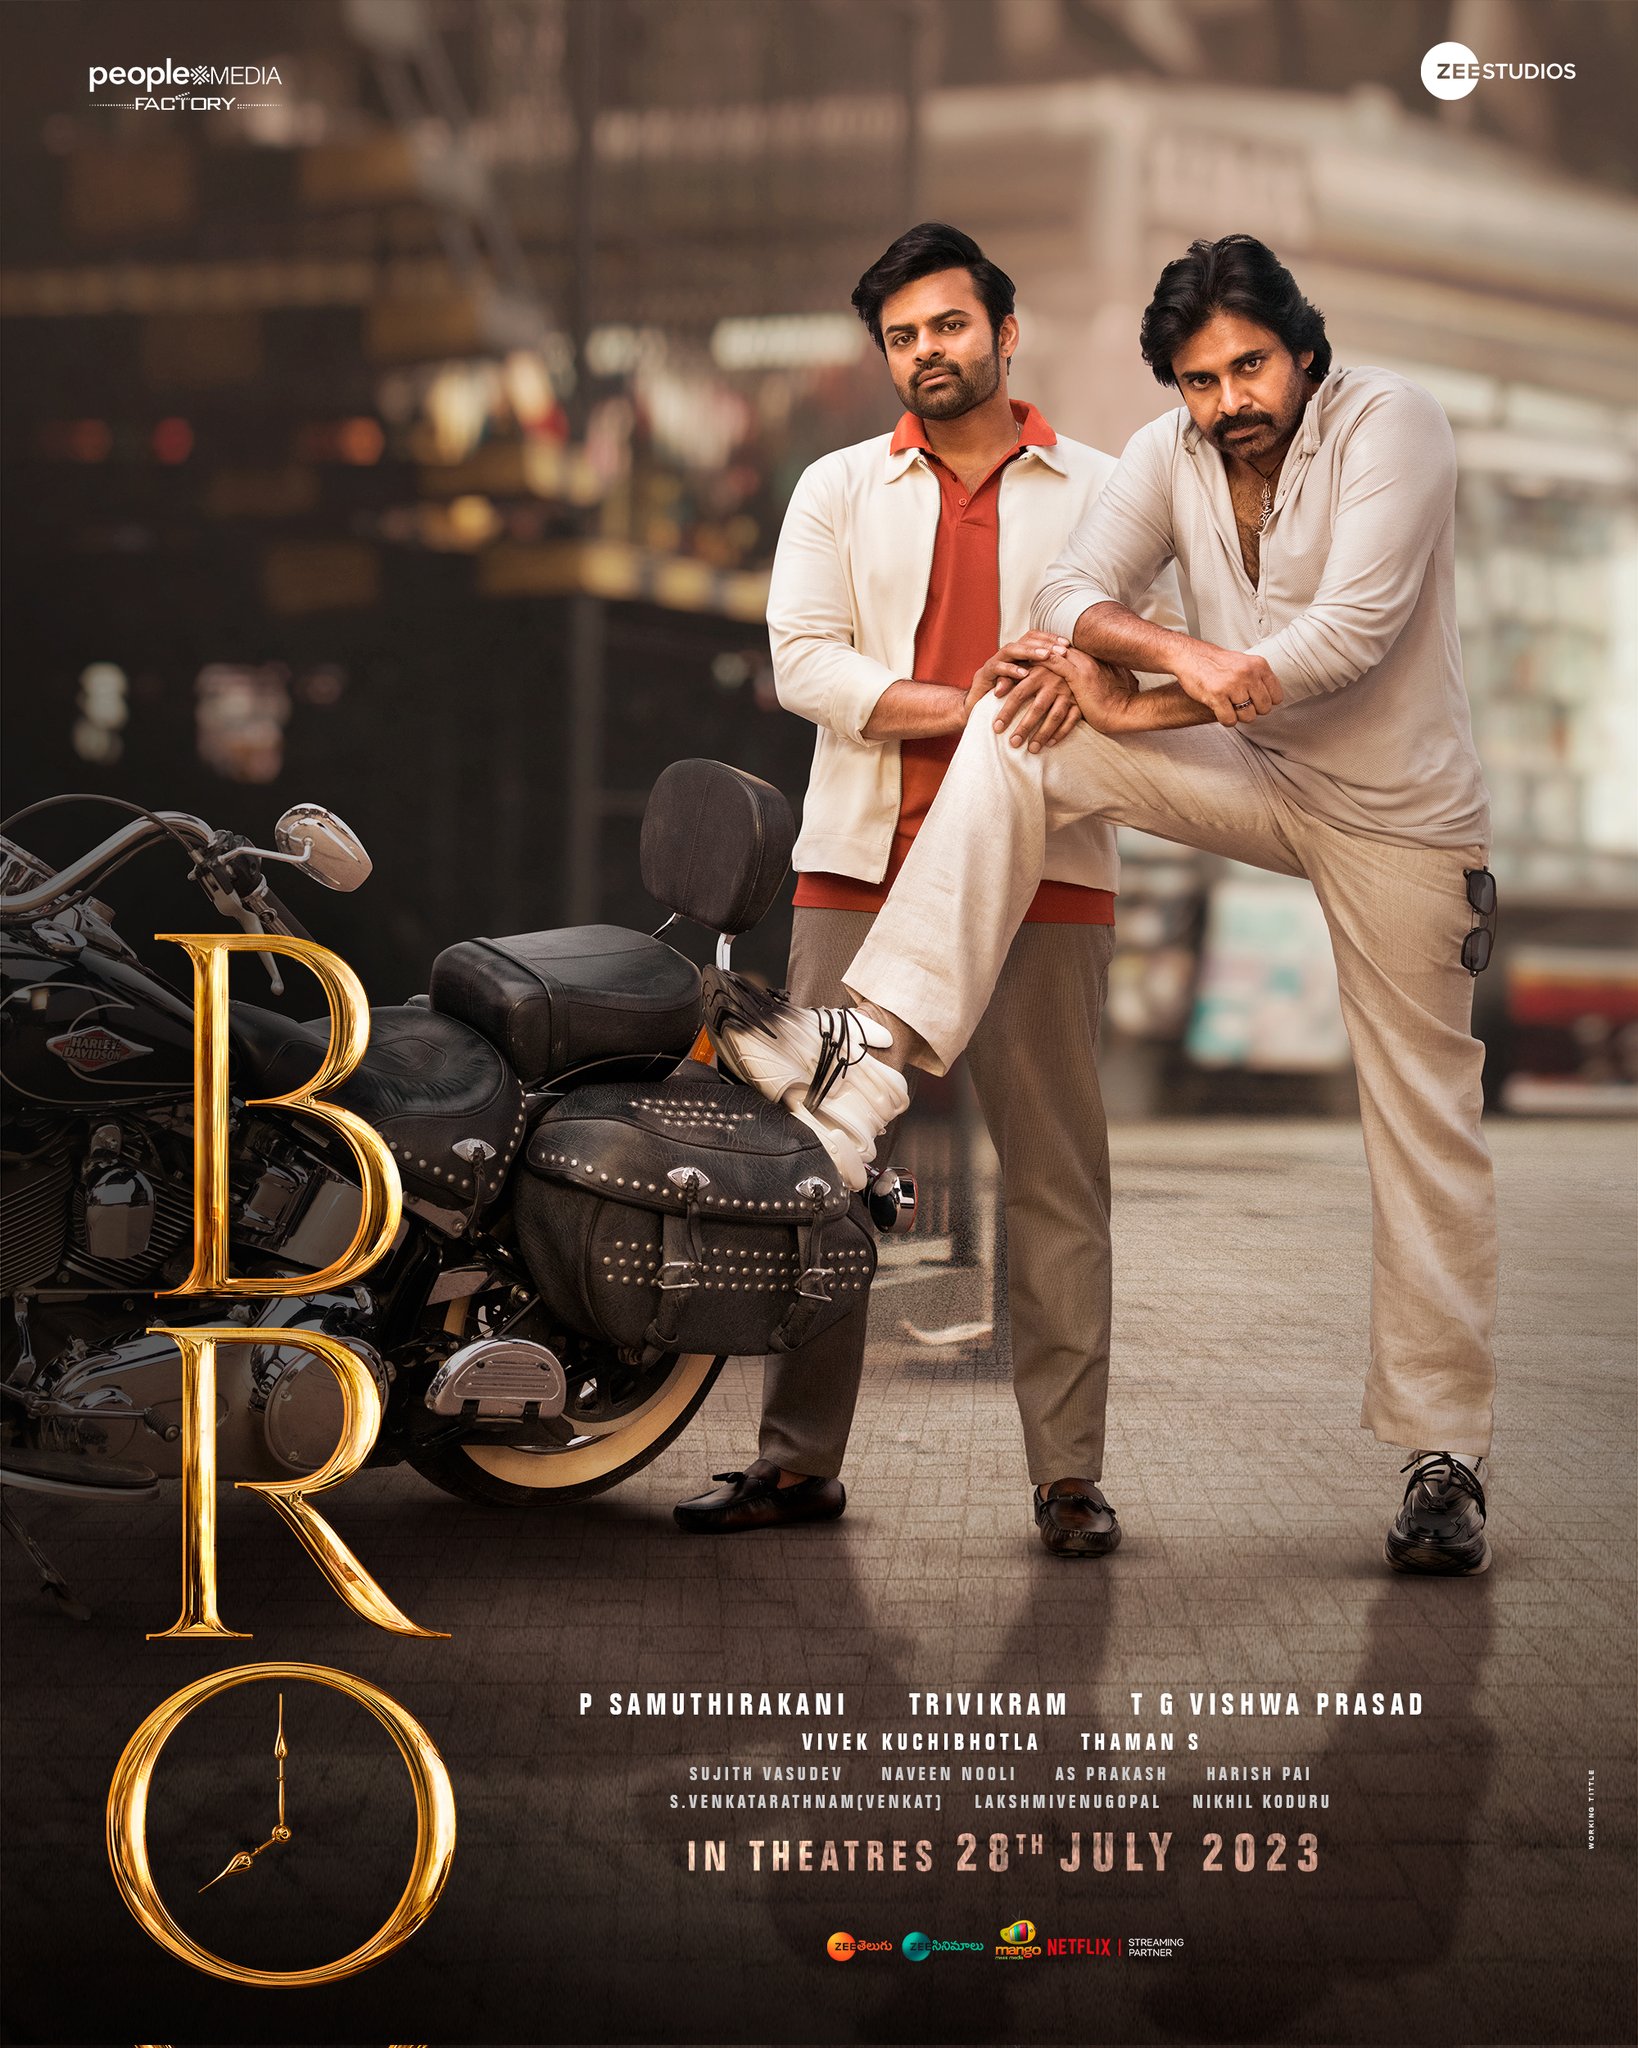 Pawan Kalyan Sai Dharam tej combination poster from Bro movie released